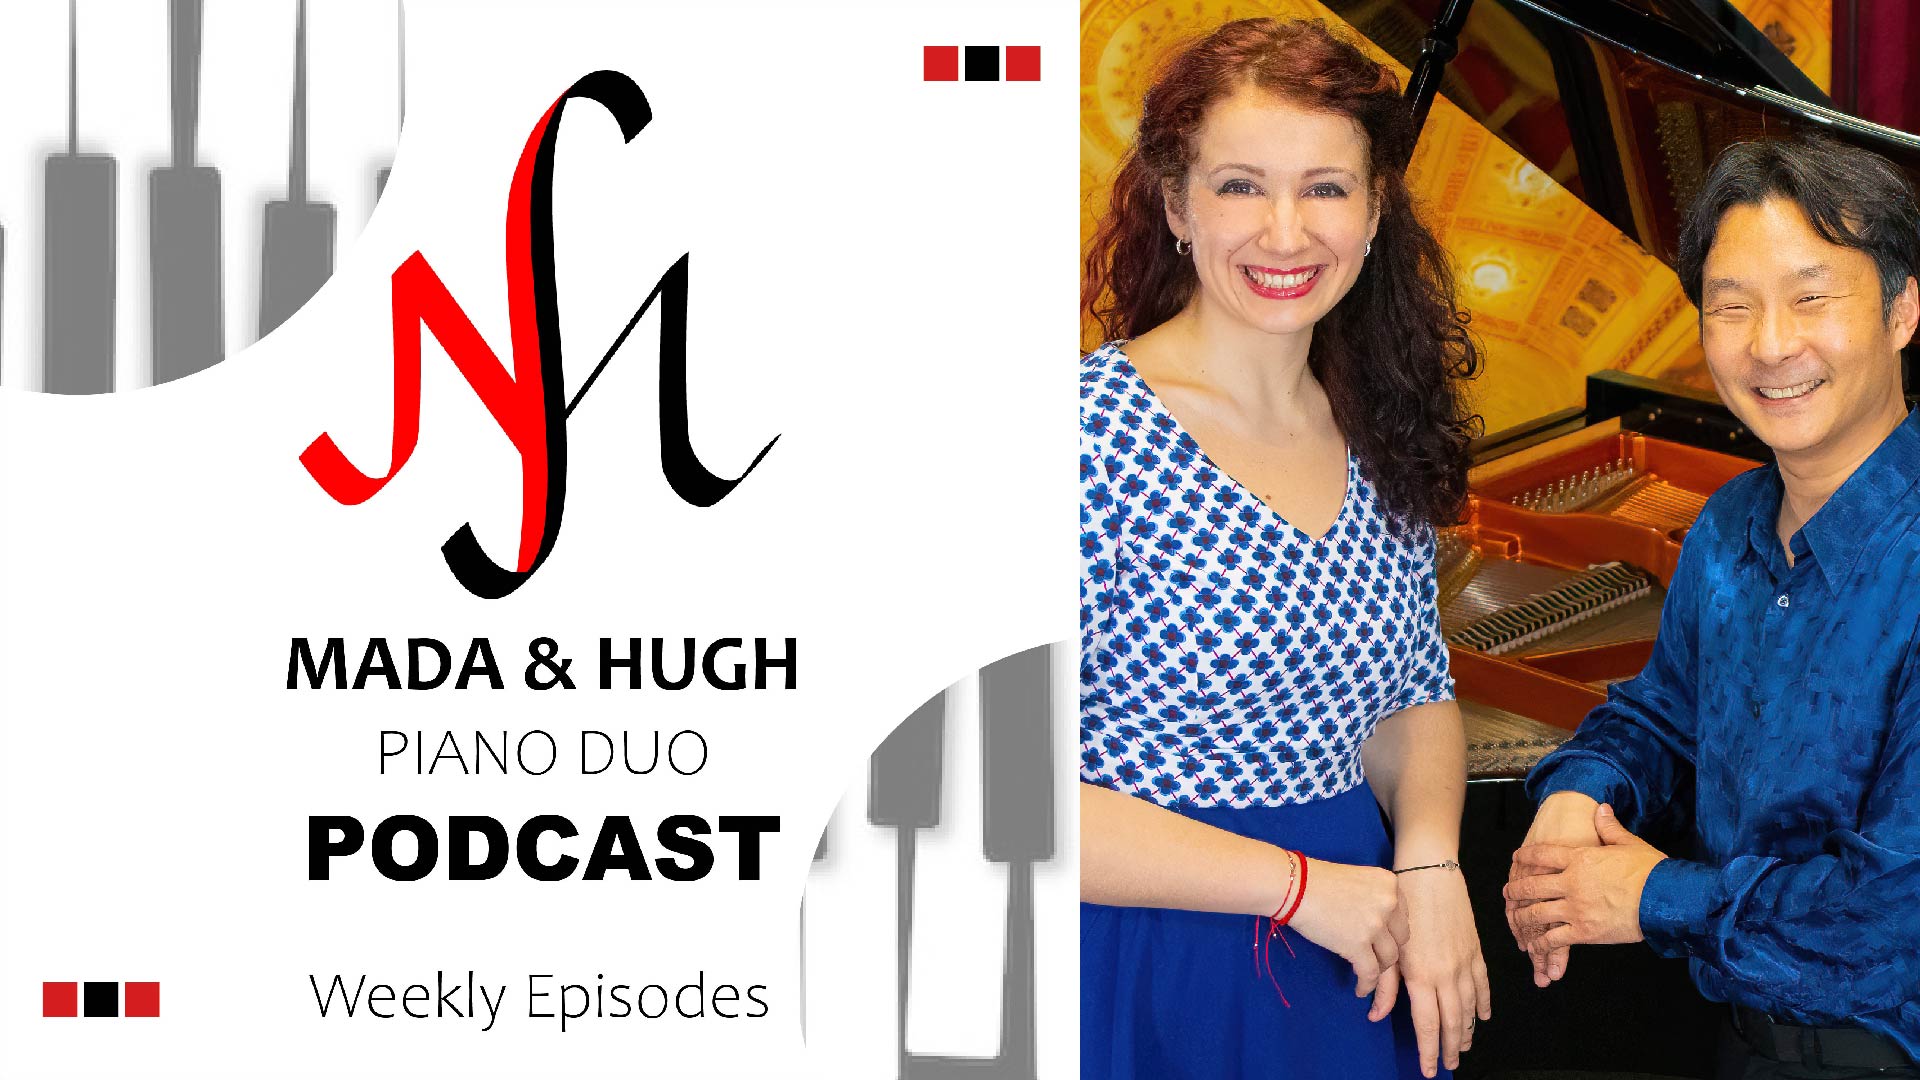 Announcing the "Mada & Hugh Piano Duo Podcast"